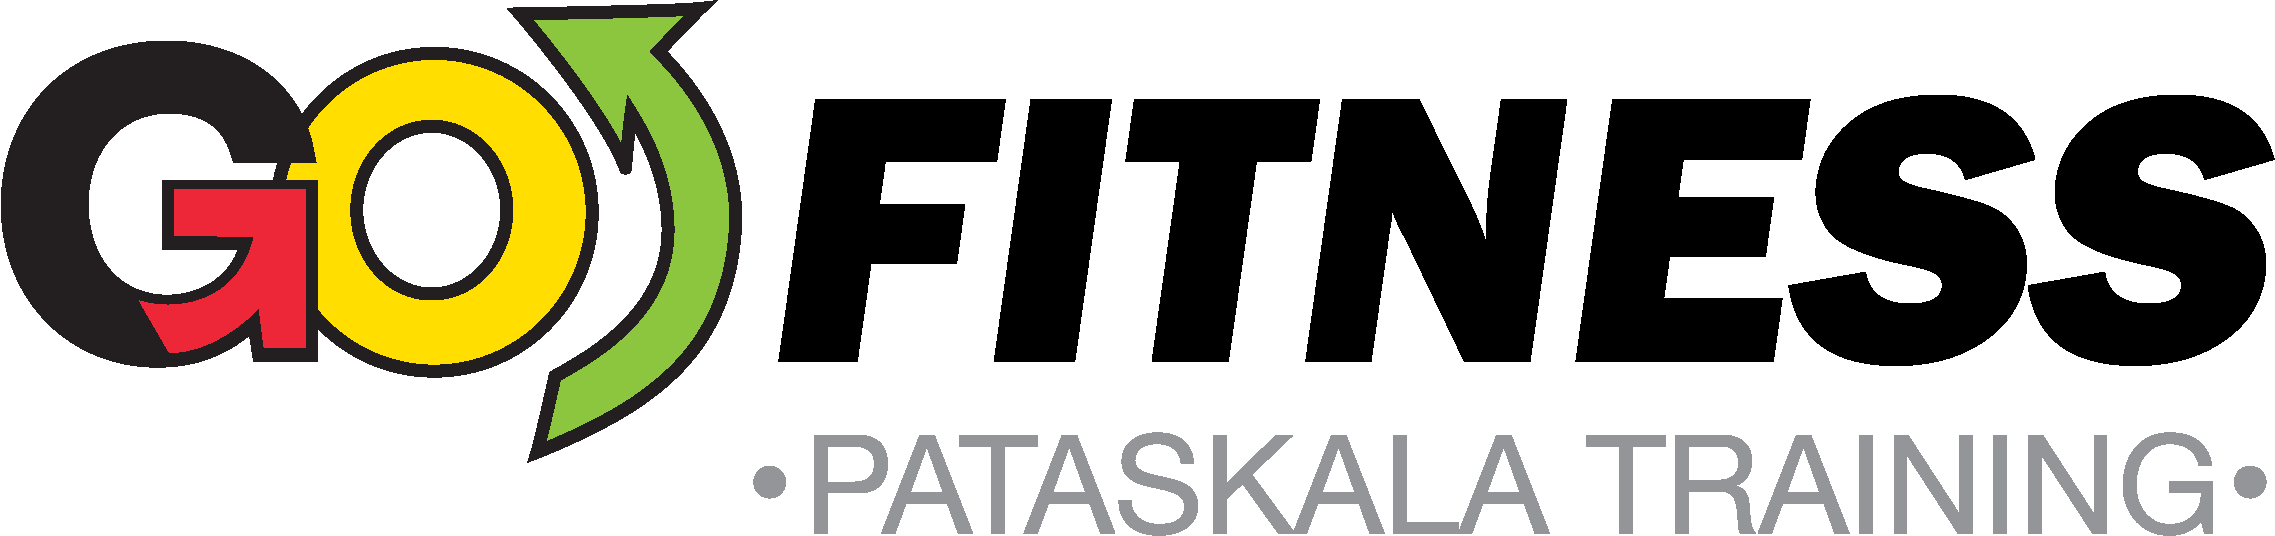 GO: Fitness Training – Pataskala